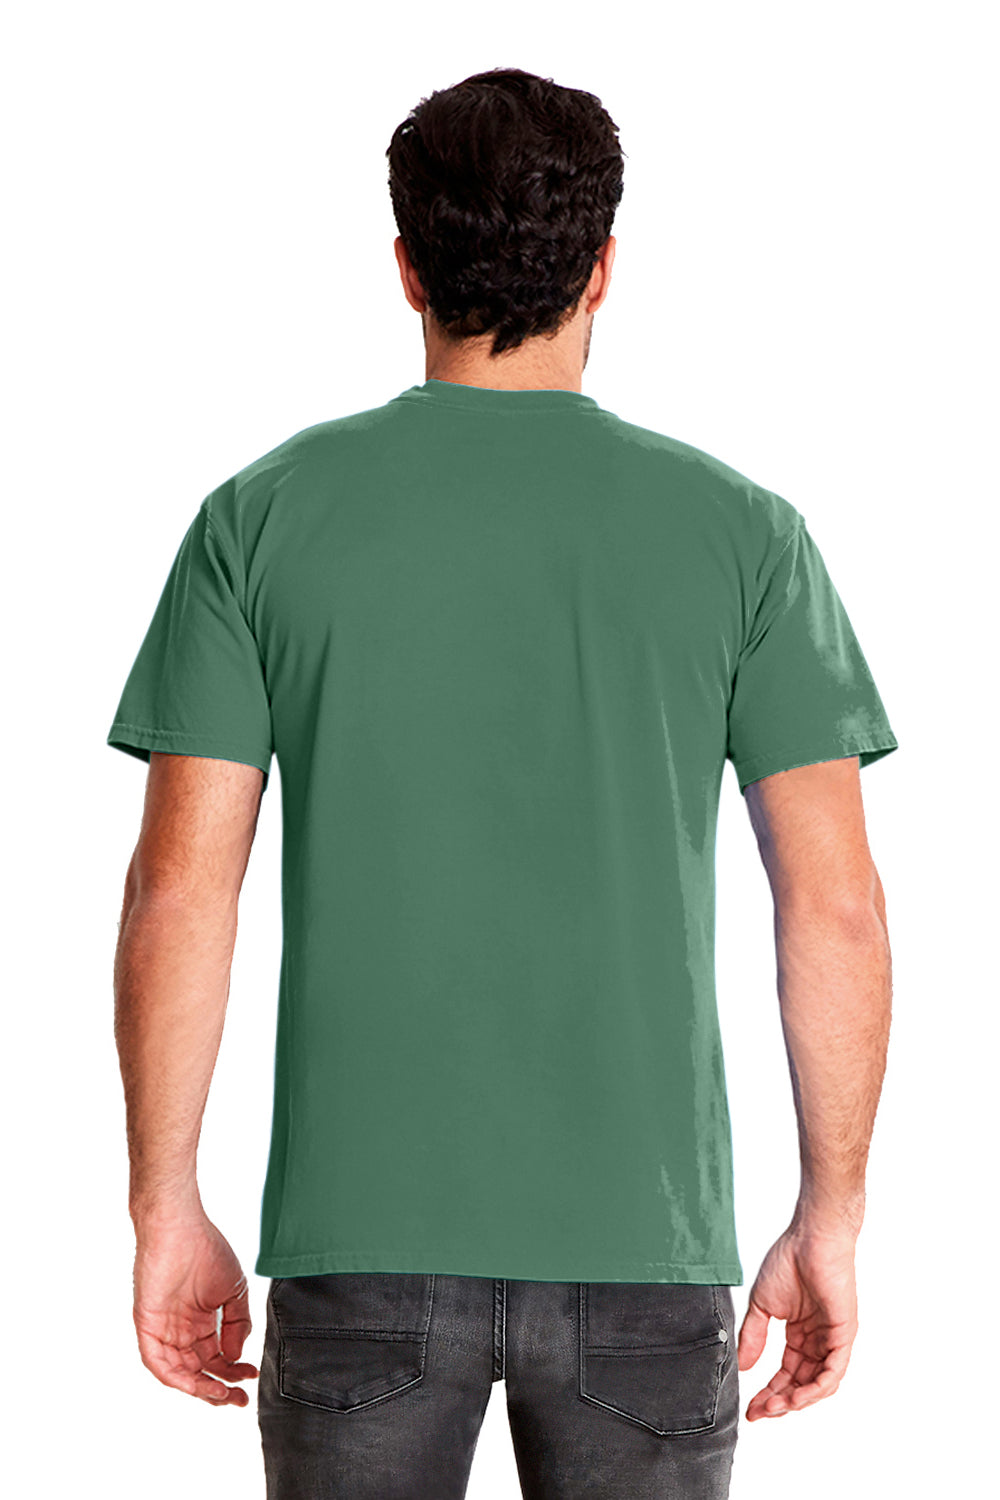 Next Level 7415 Mens Inspired Dye Jersey Short Sleeve Crewneck T-Shirt w/ Pocket Clover Green Back